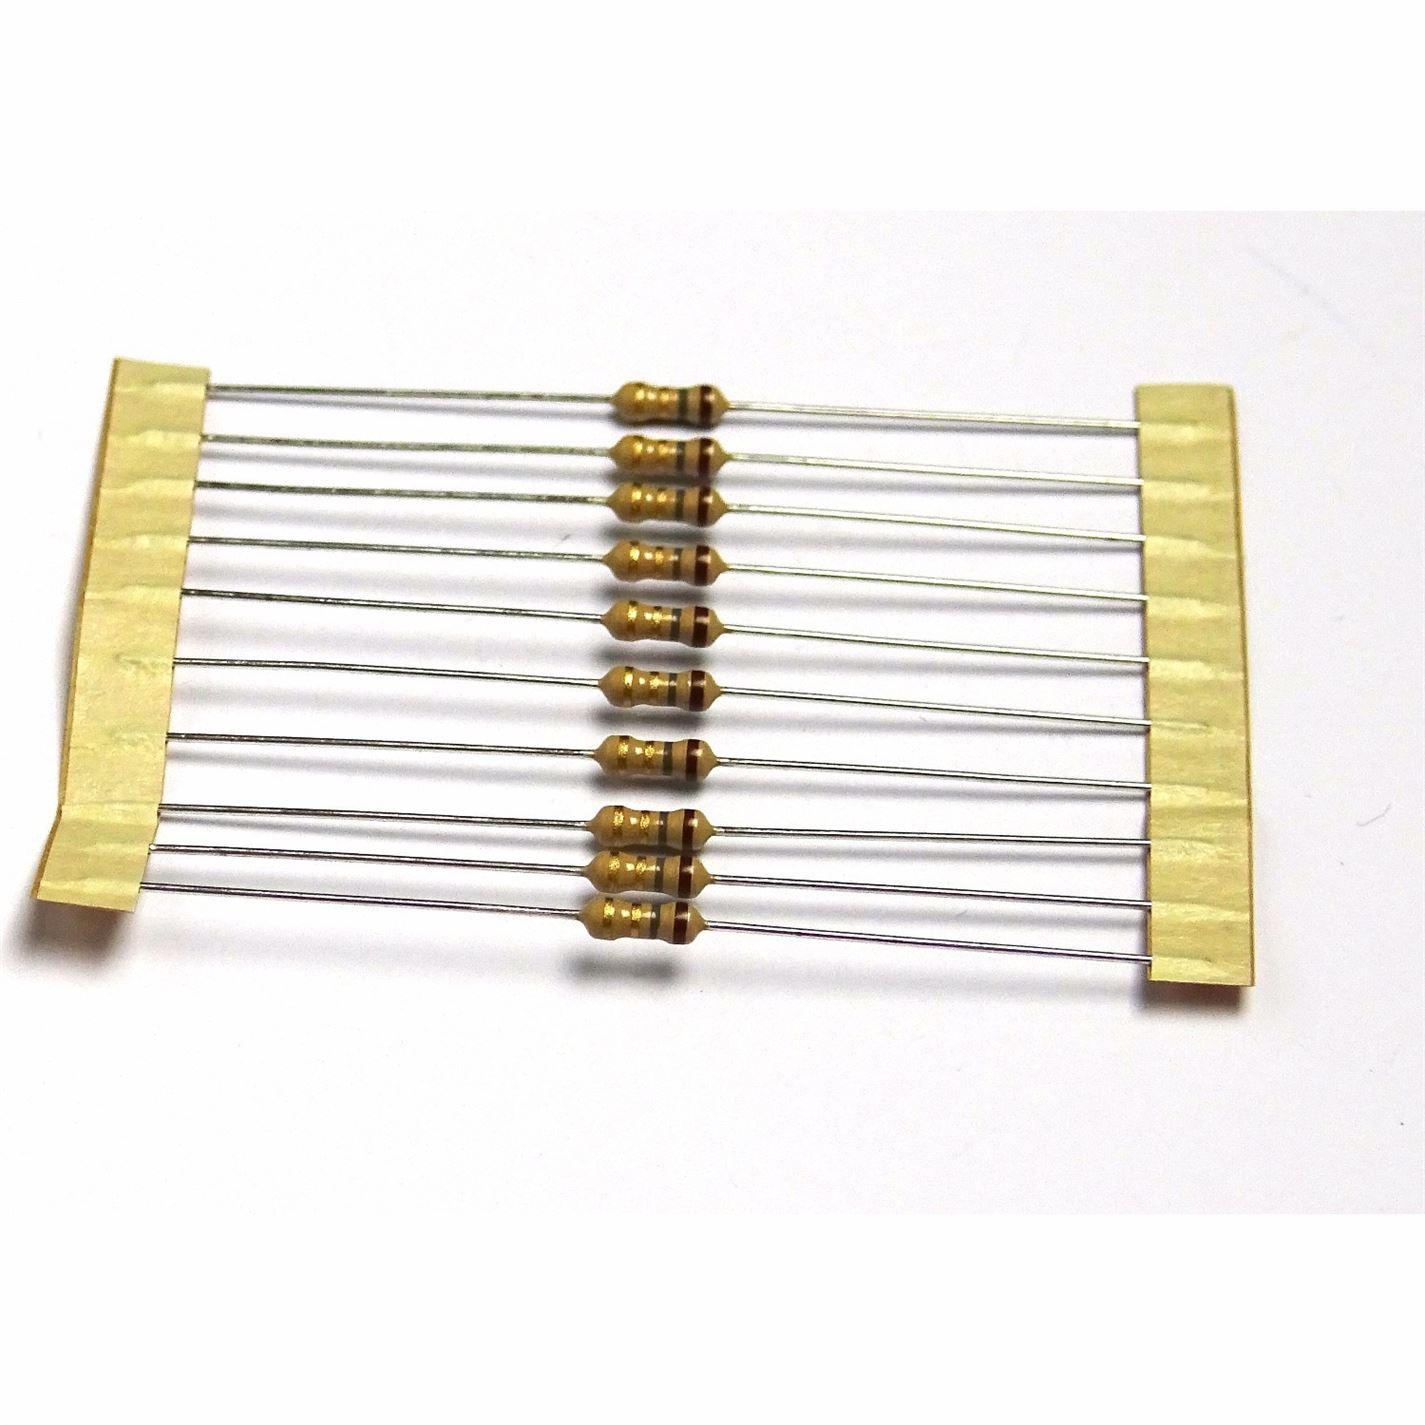 10 x resistors 1.8 ohm ohms 1/4w 0.25w 5% Carbon Film - UK Seller